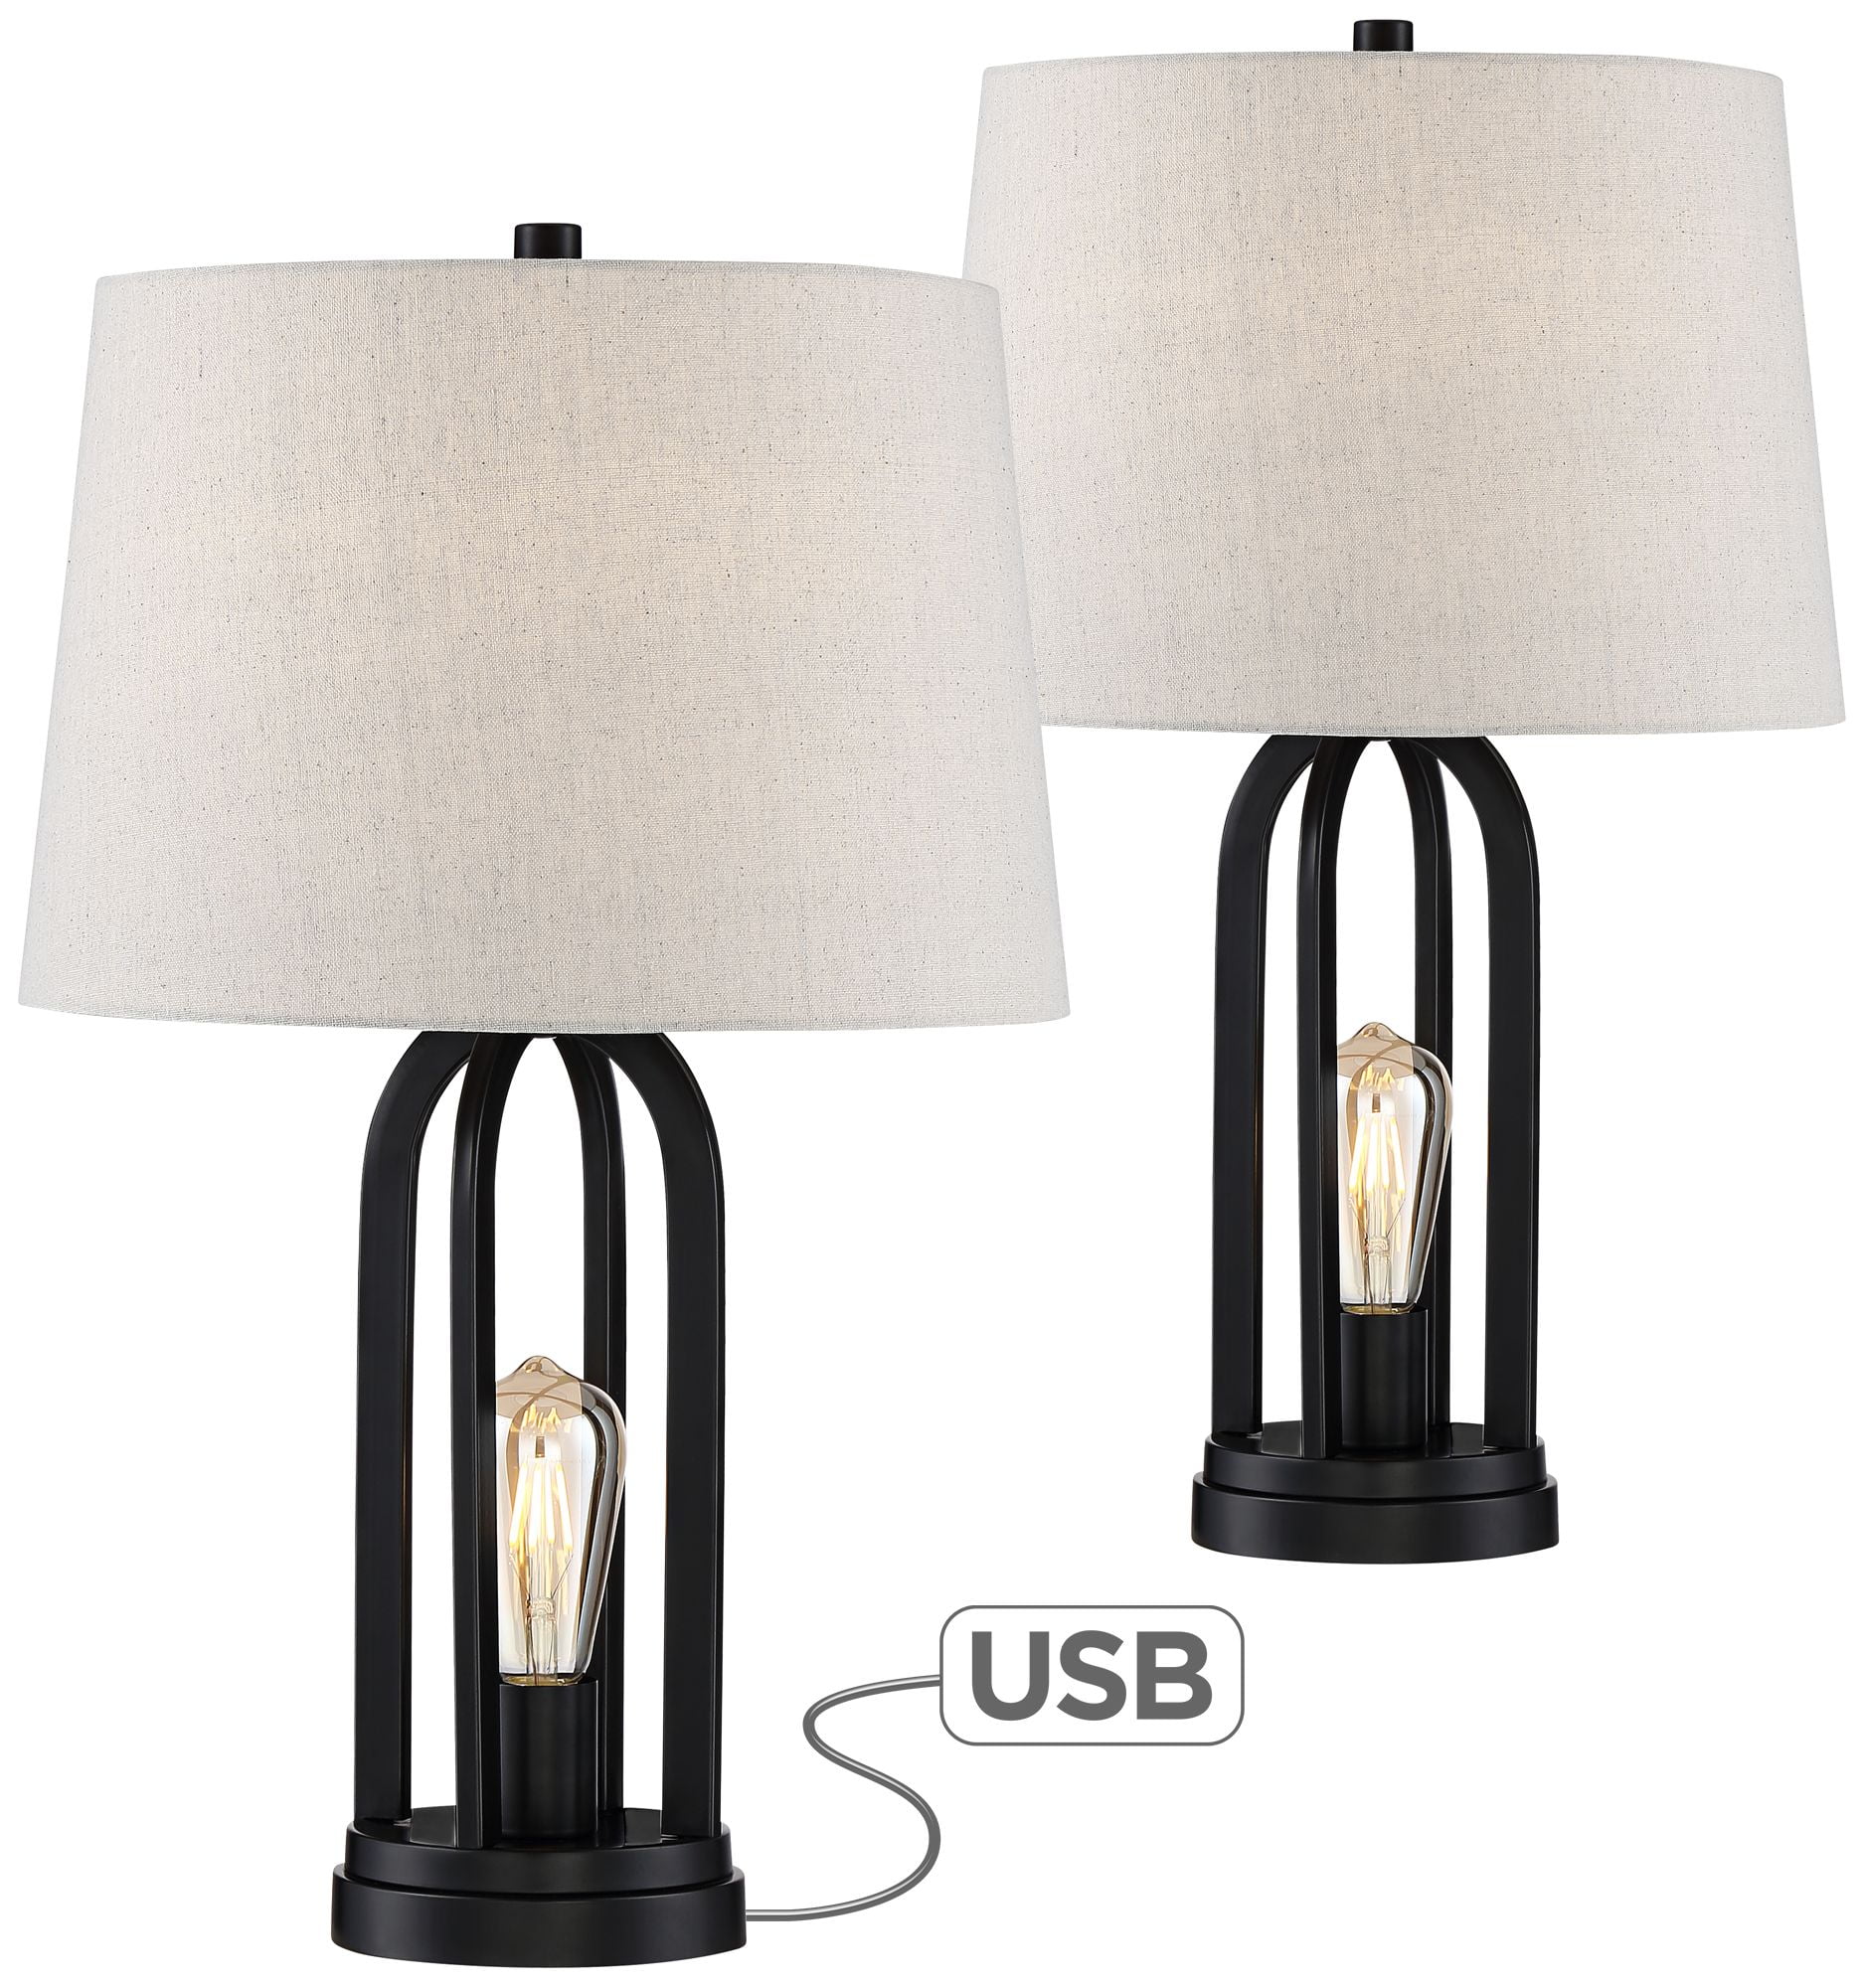 360 Lighting Modern Industrial Table Lamps Set Of 2 With Nightlight Led Usb Port Black Linen Shade For Living Room Bedroom Walmart Com Walmart Com